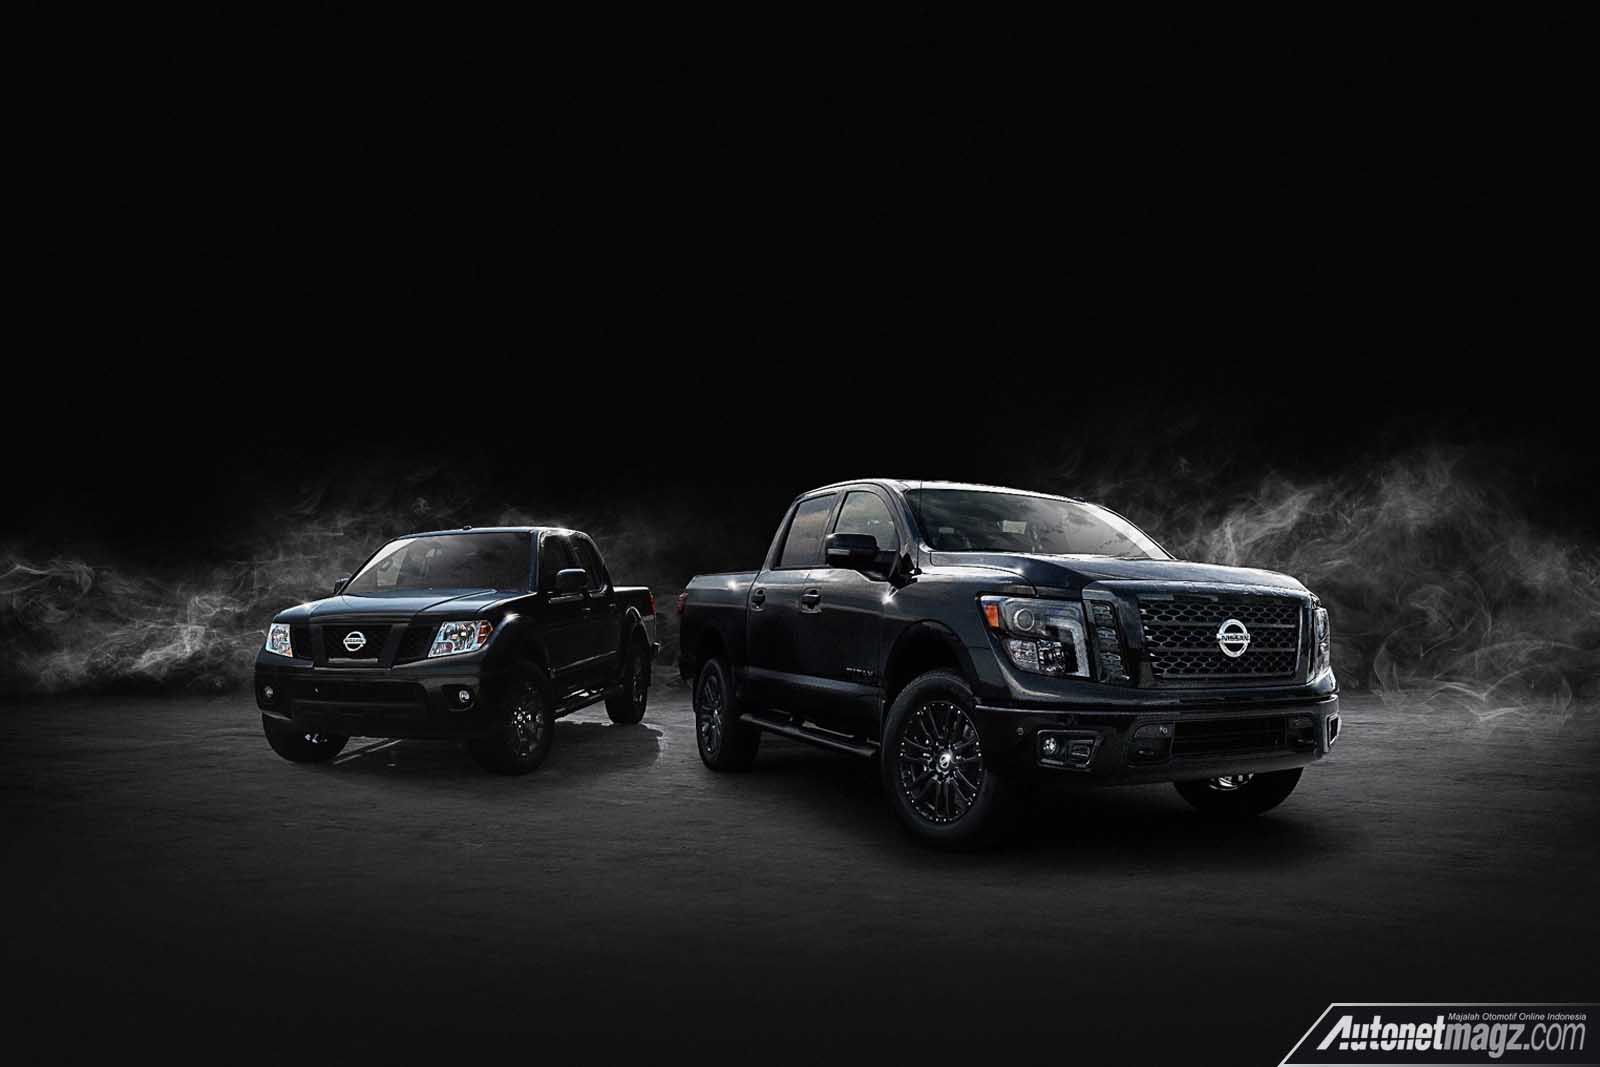 Berita, Nissan Midnight Edition: Nissan Midnight Edition Untuk Frontier, Titan, dan Titan XD